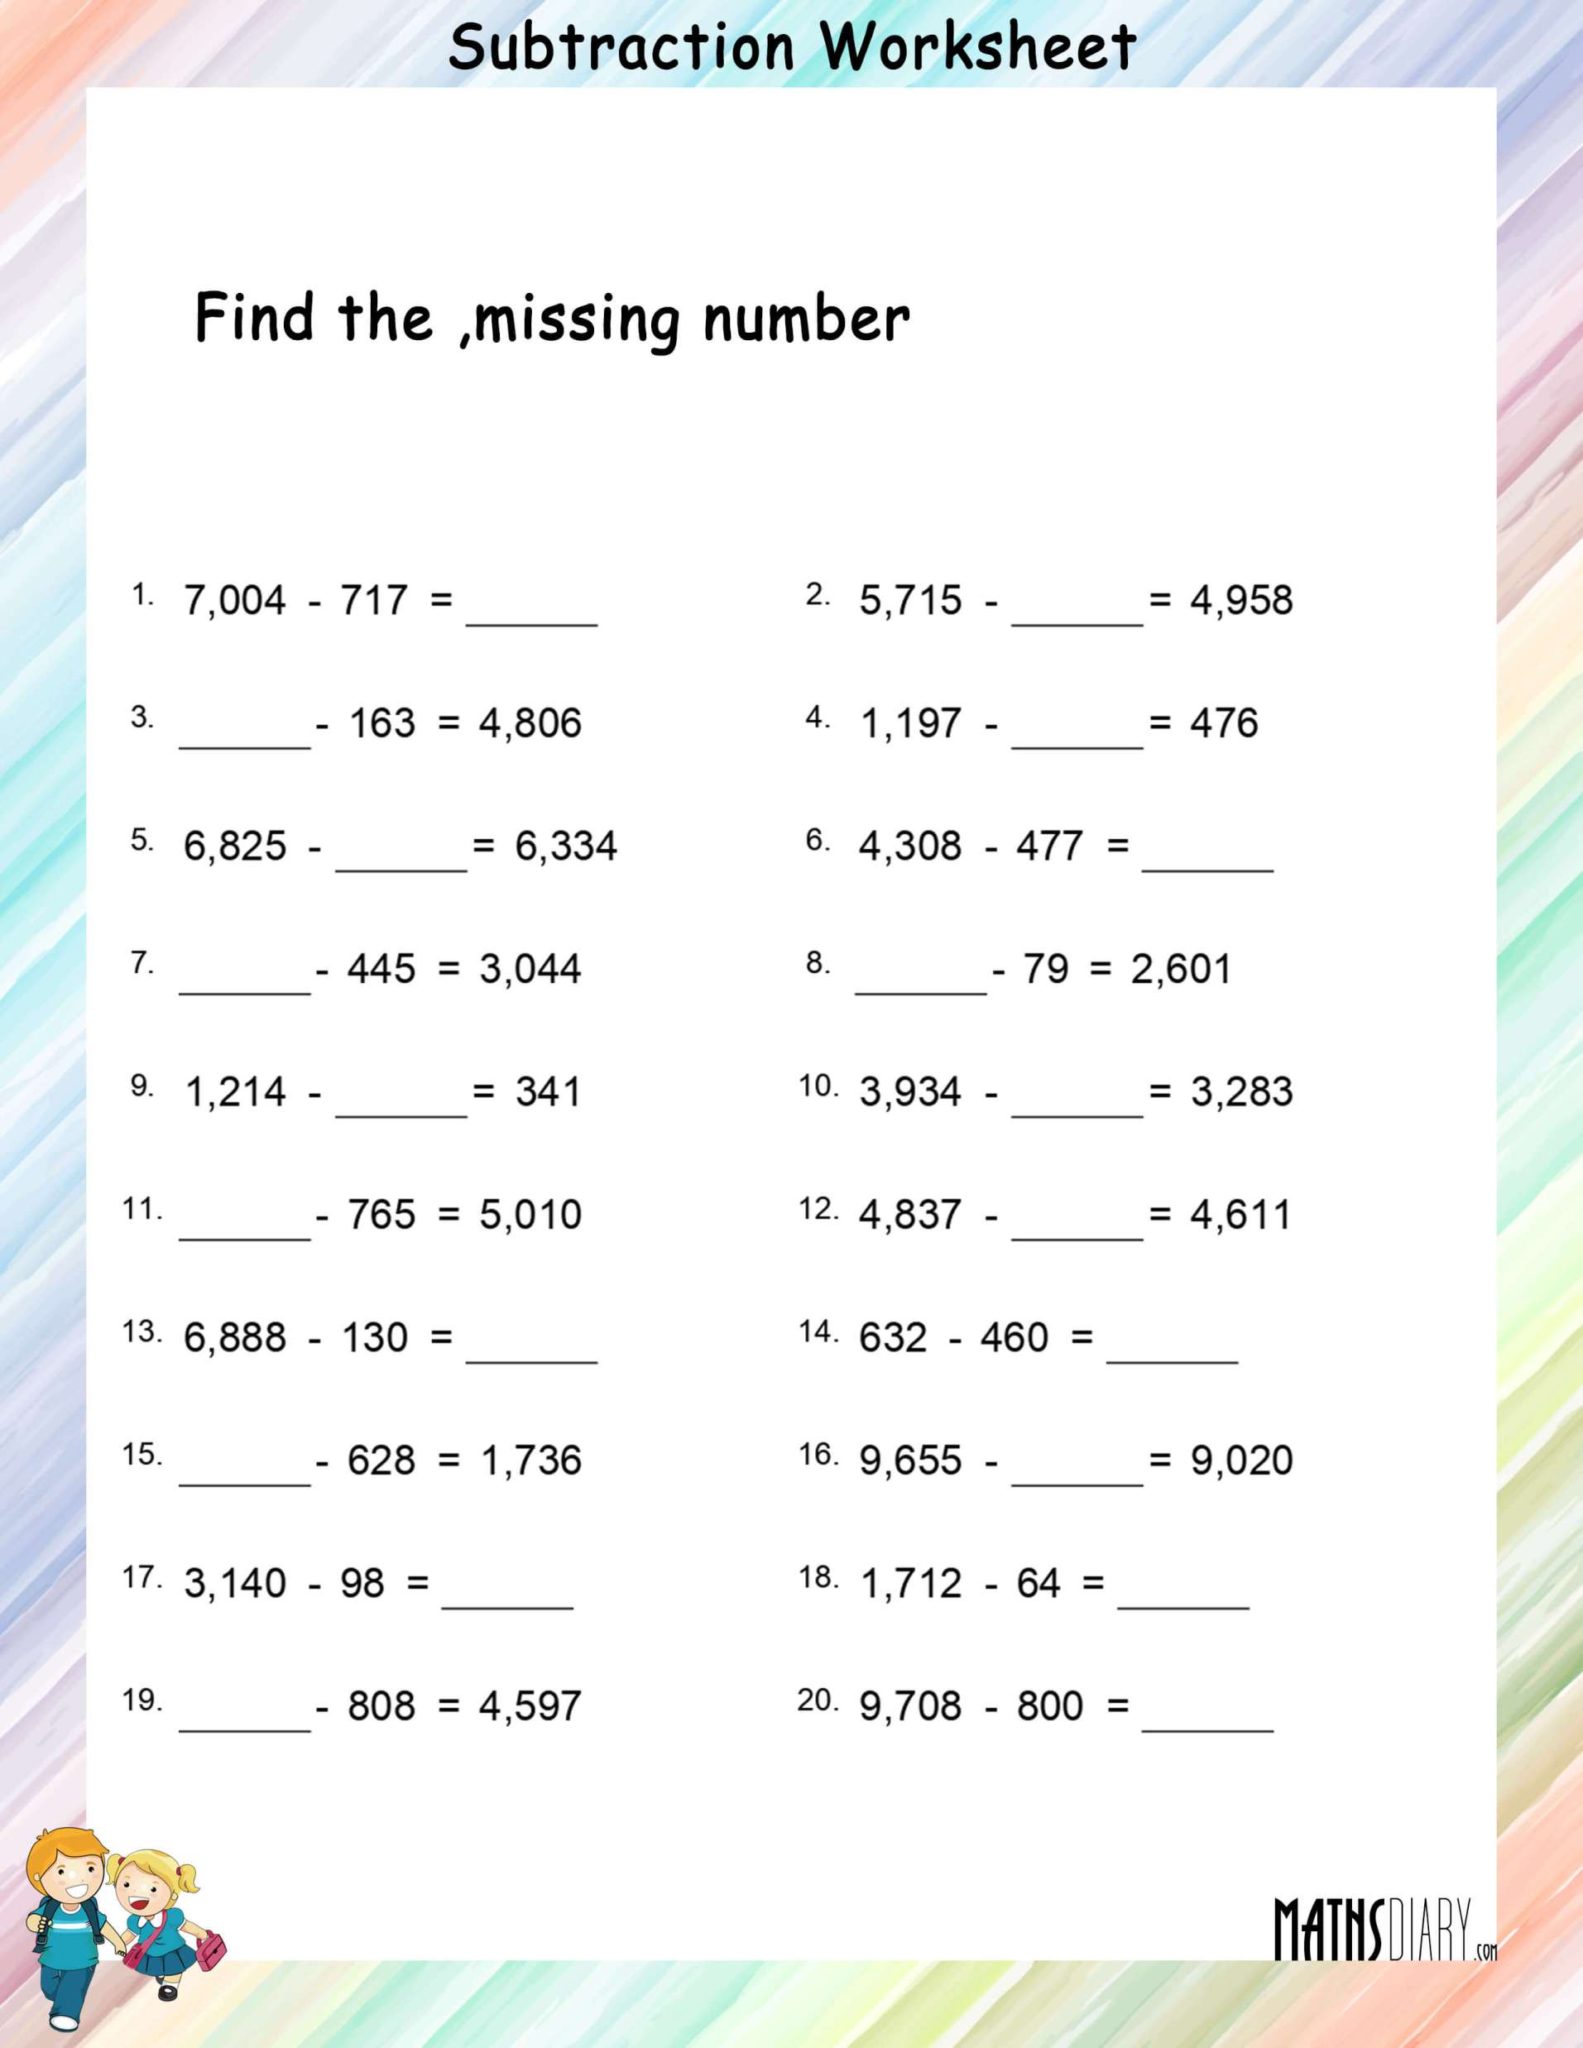 subtraction-missing-numbers-worksheet